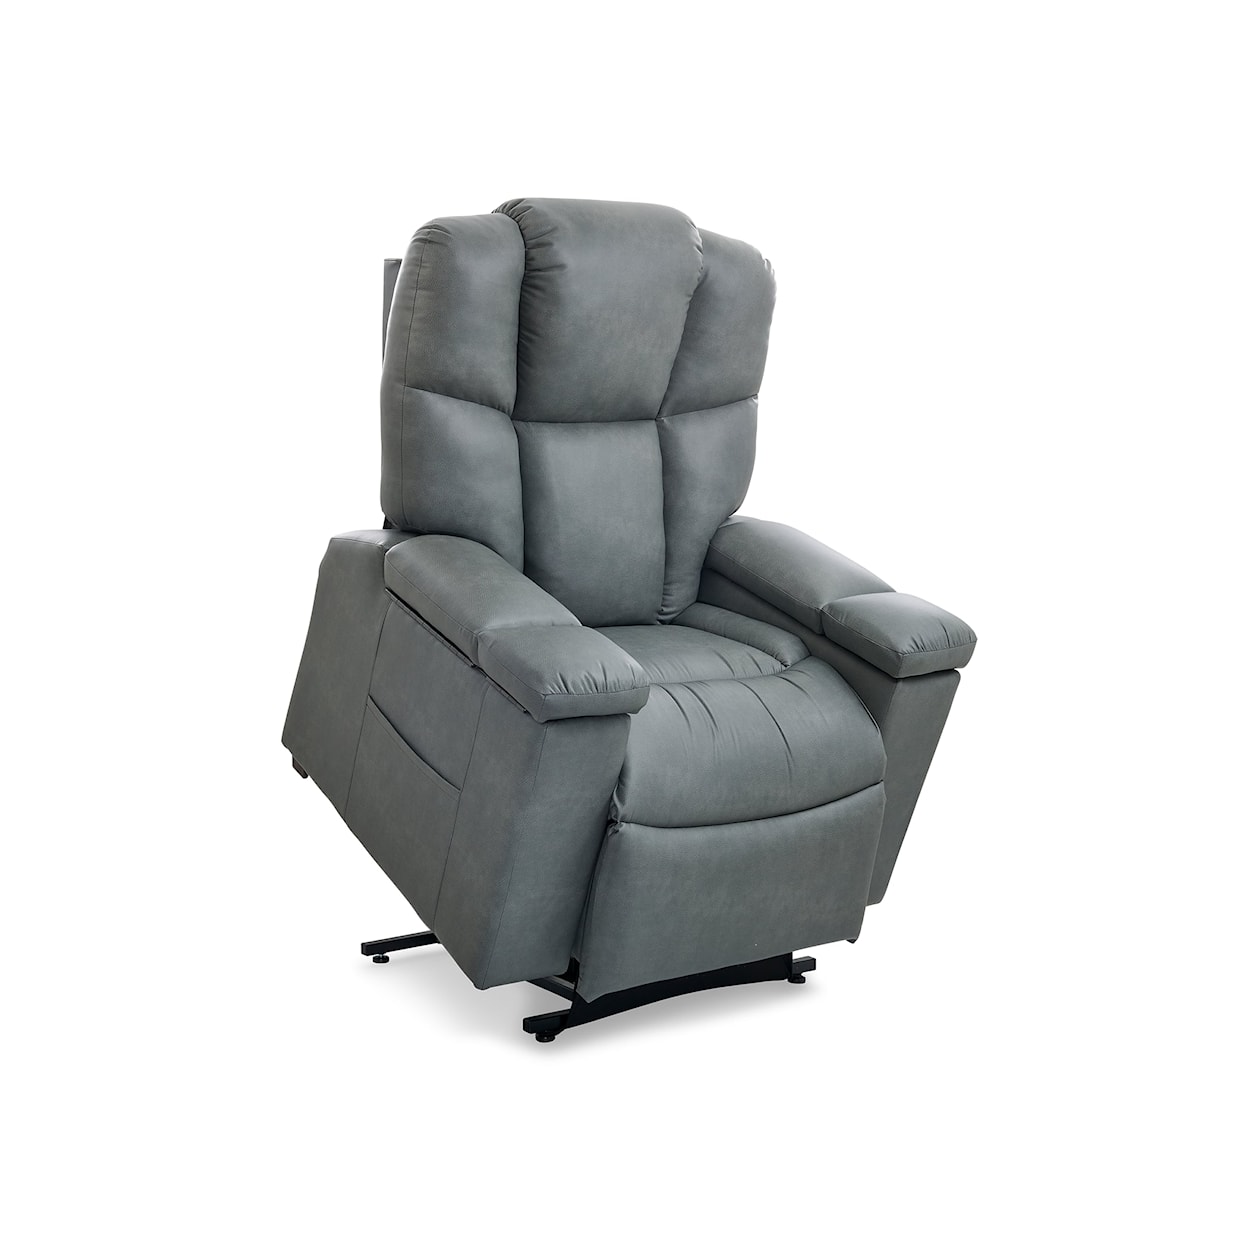 UltraComfort Rigel Lift Chair with Power Headrest & Lumbar